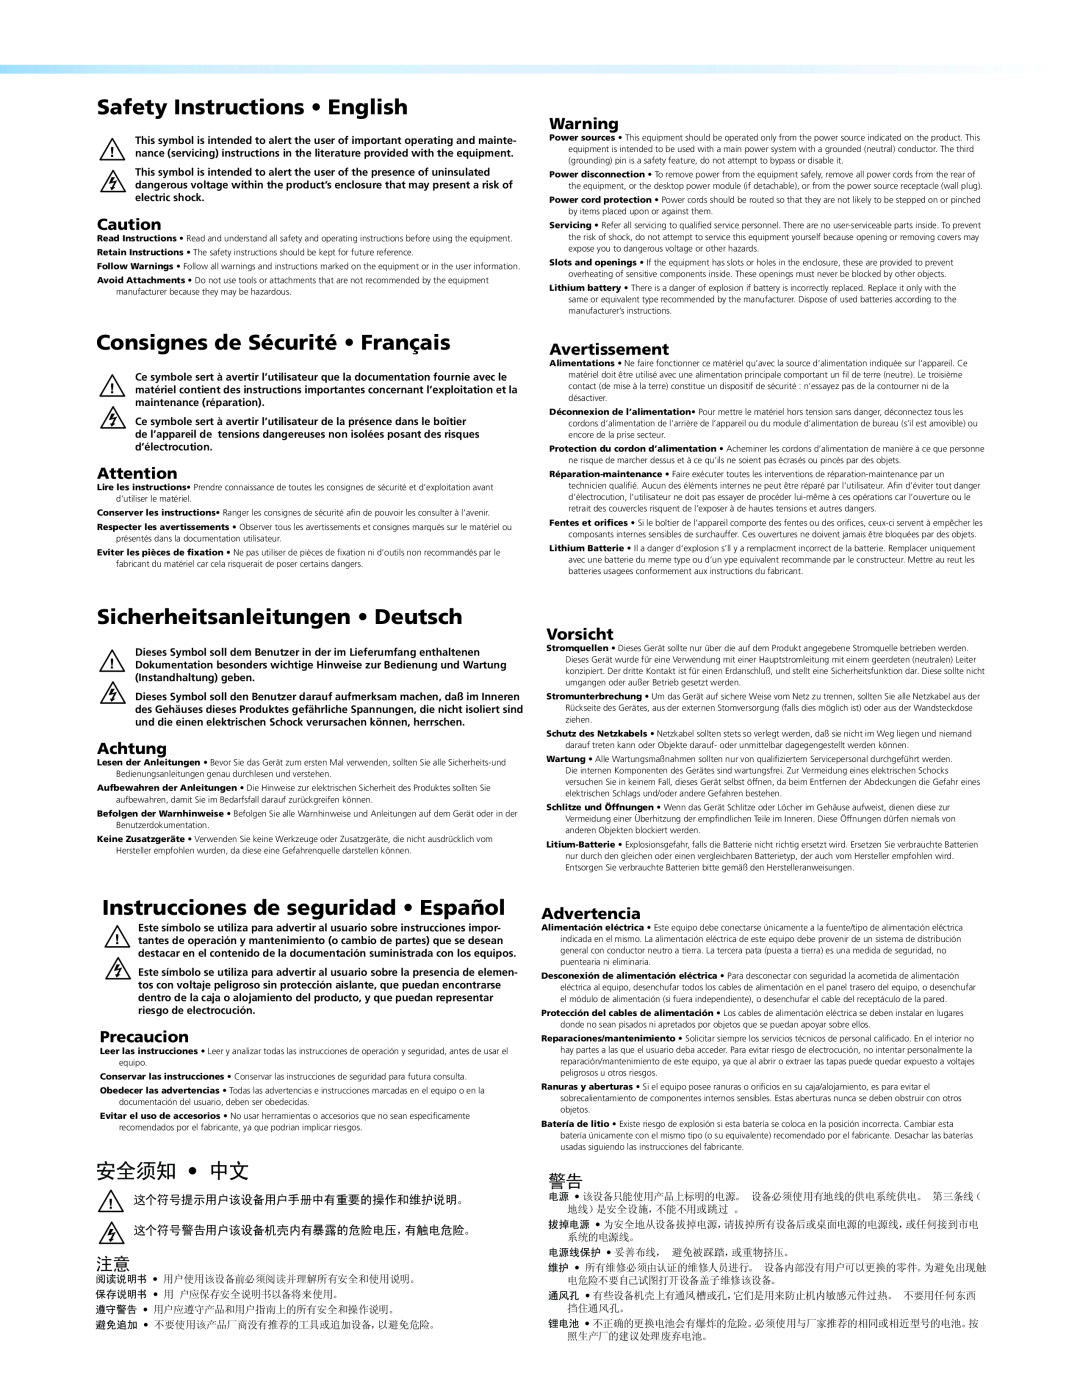 Extron electronic FLS 101 Safety Instructions English, Consignes de Sécurité Français, Sicherheitsanleitungen Deutsch 